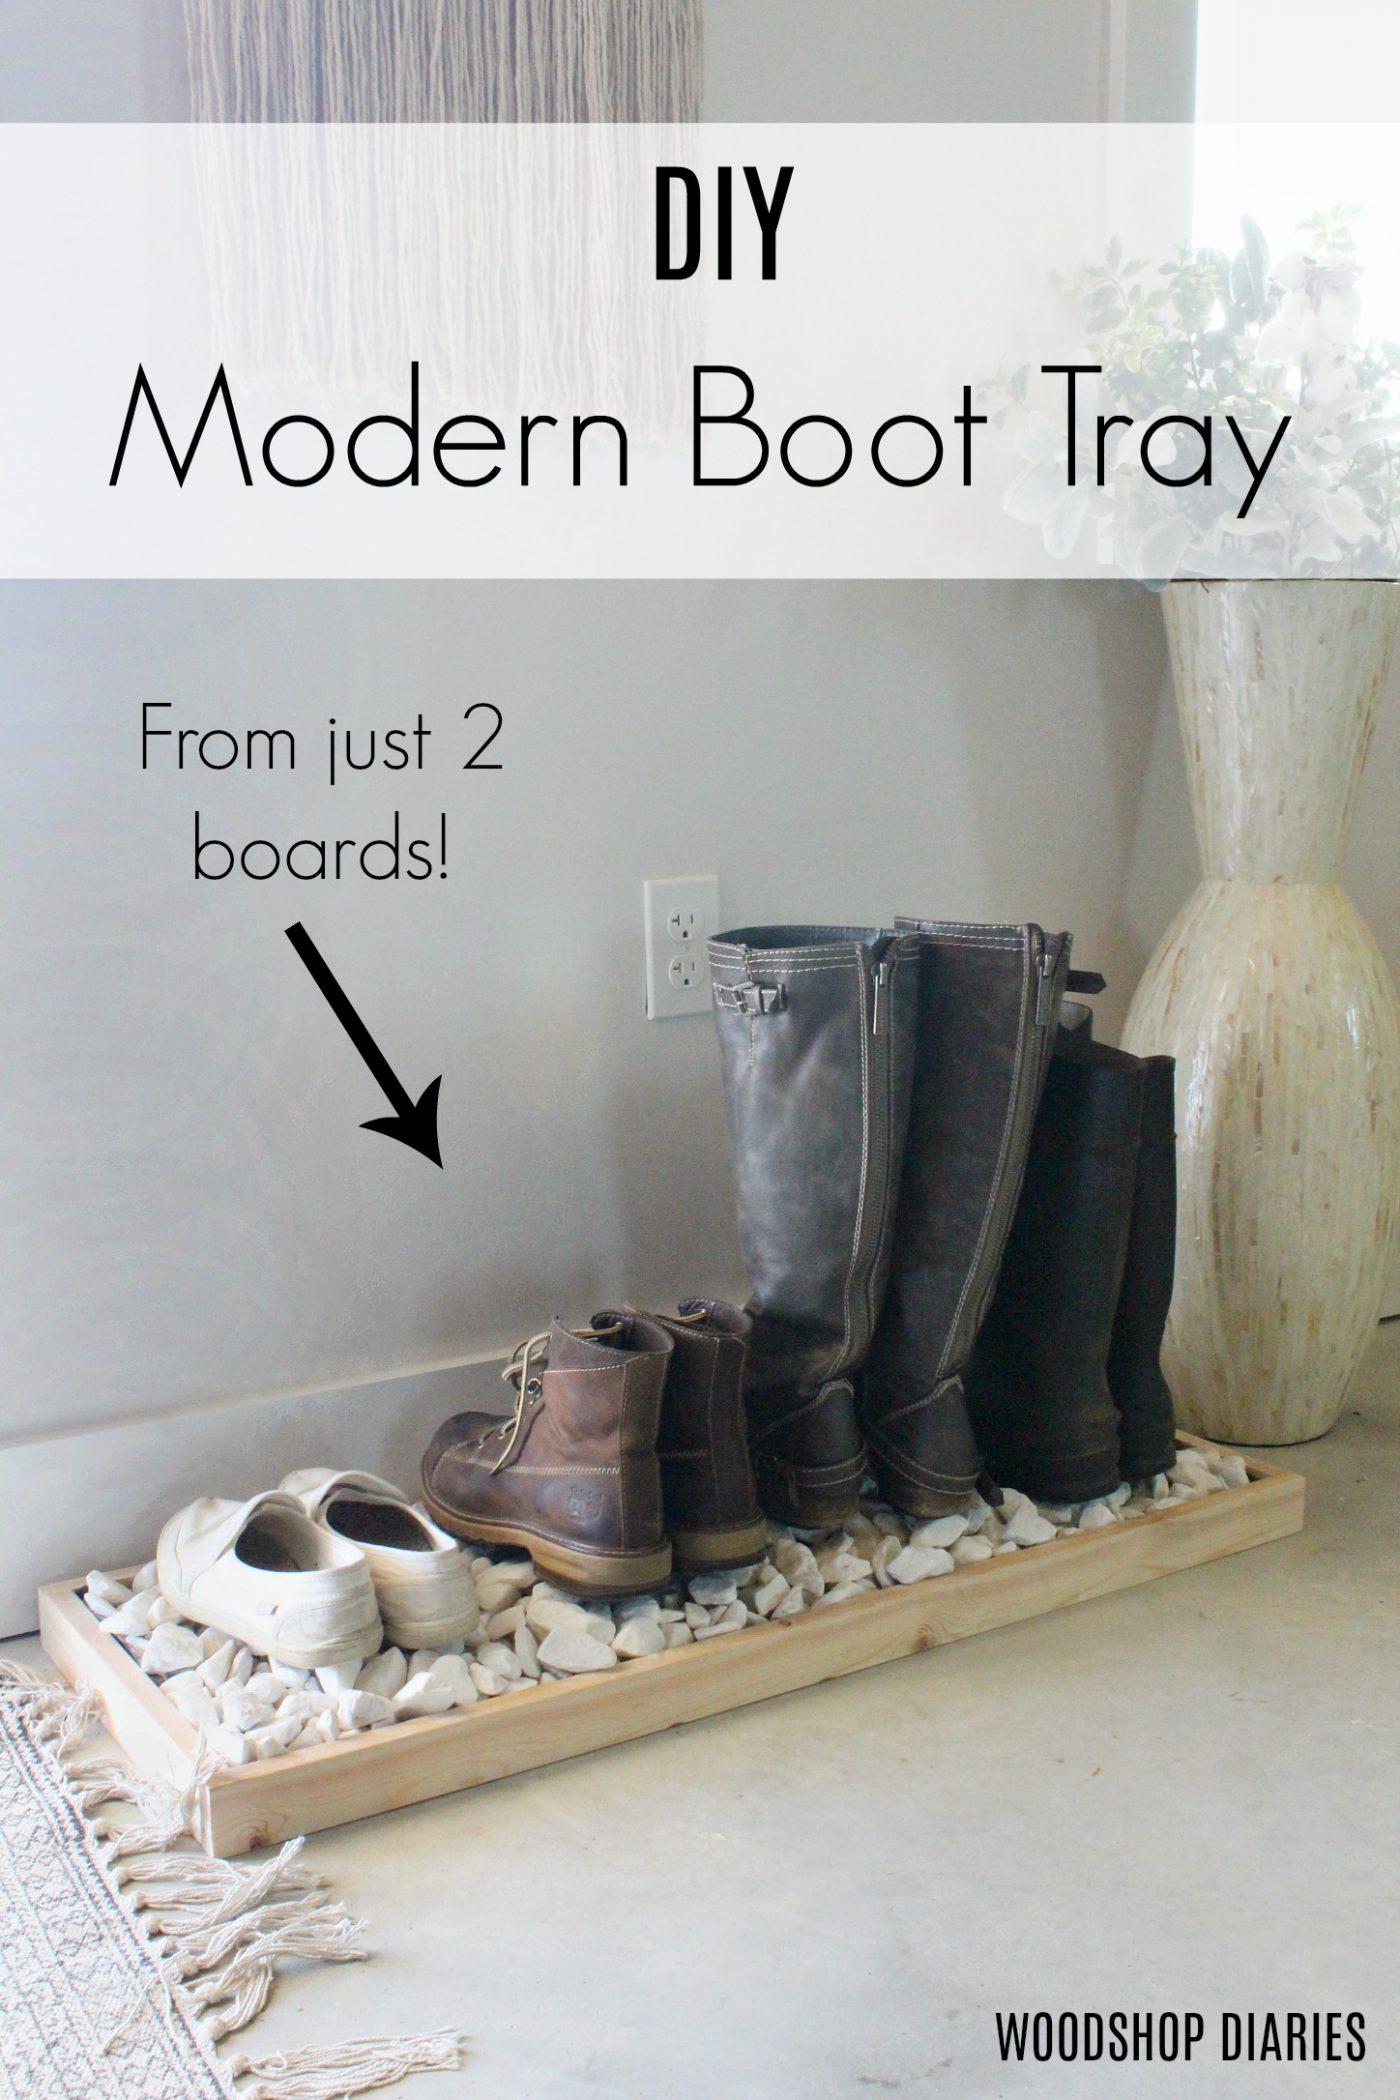 $5 DIY Boot Tray